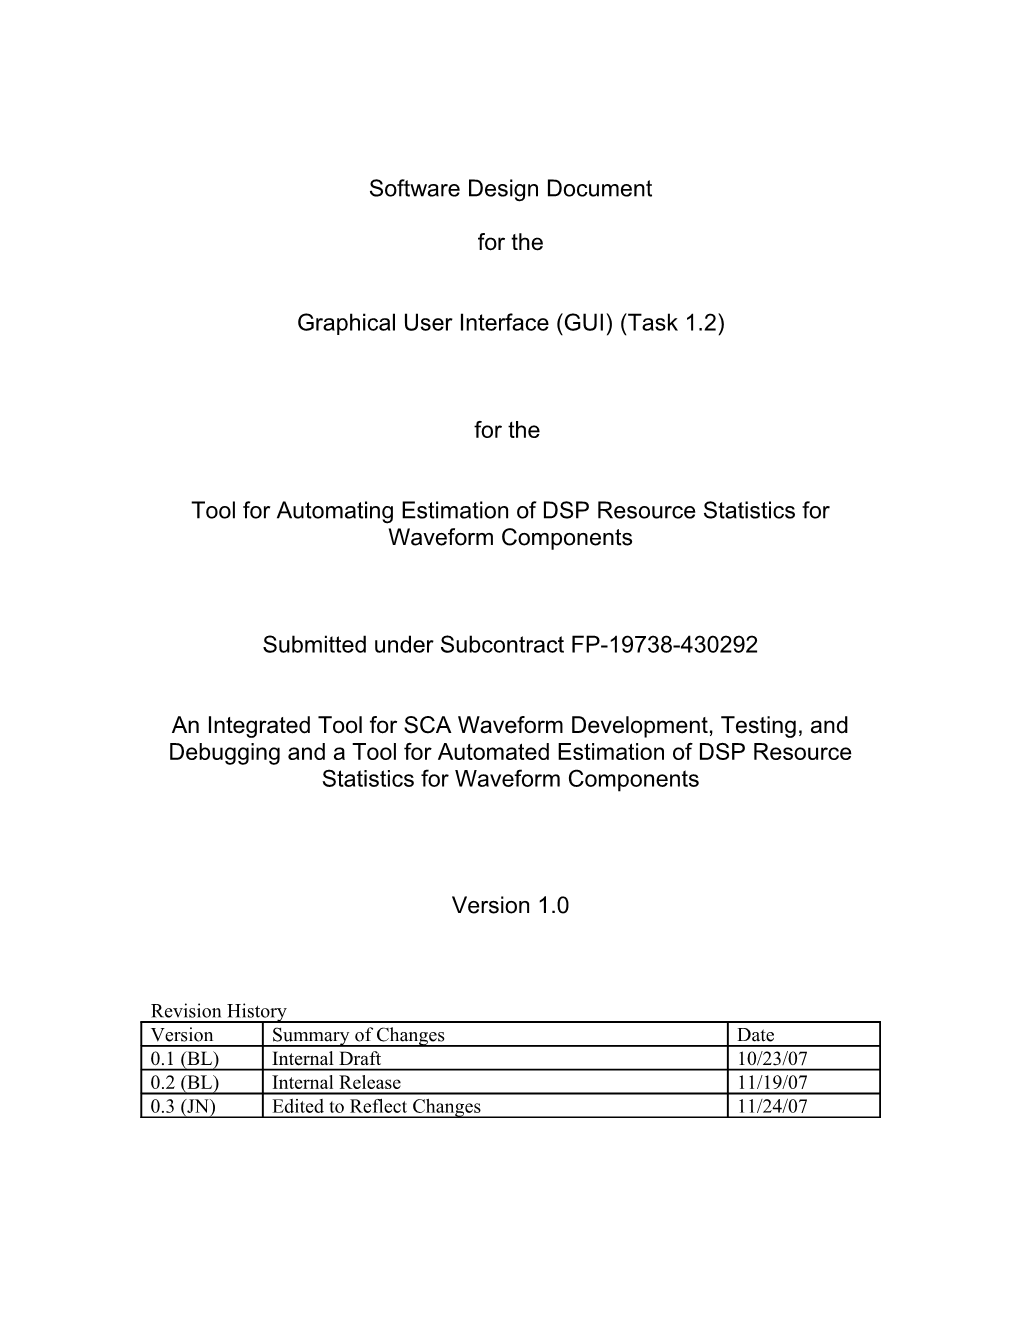 Software Design Document s1